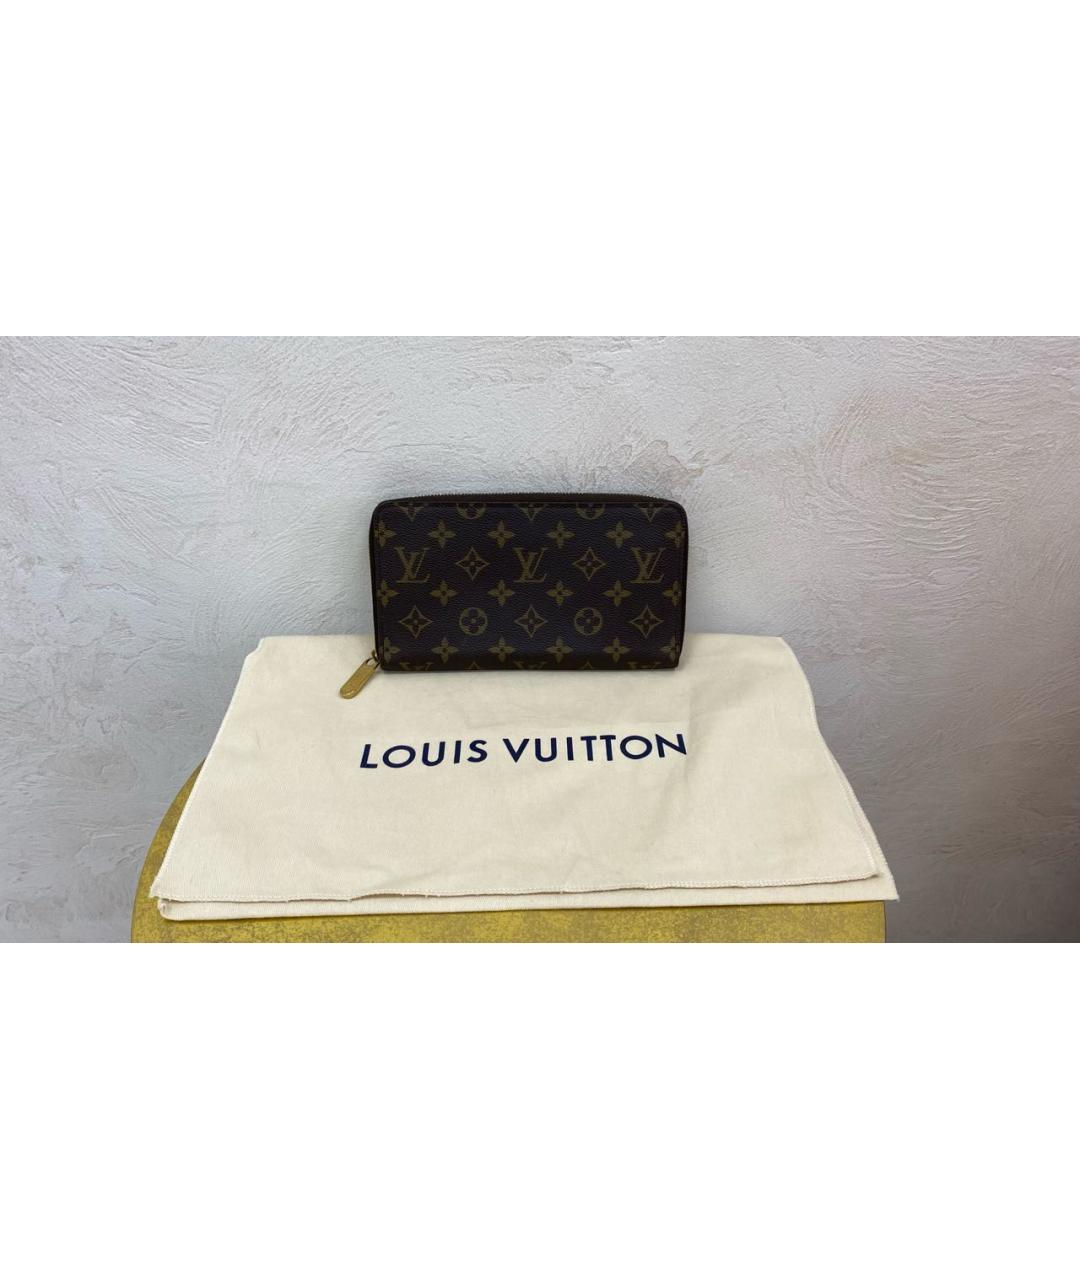 LOUIS VUITTON PRE-OWNED Коричневый кожаный кошелек, фото 2